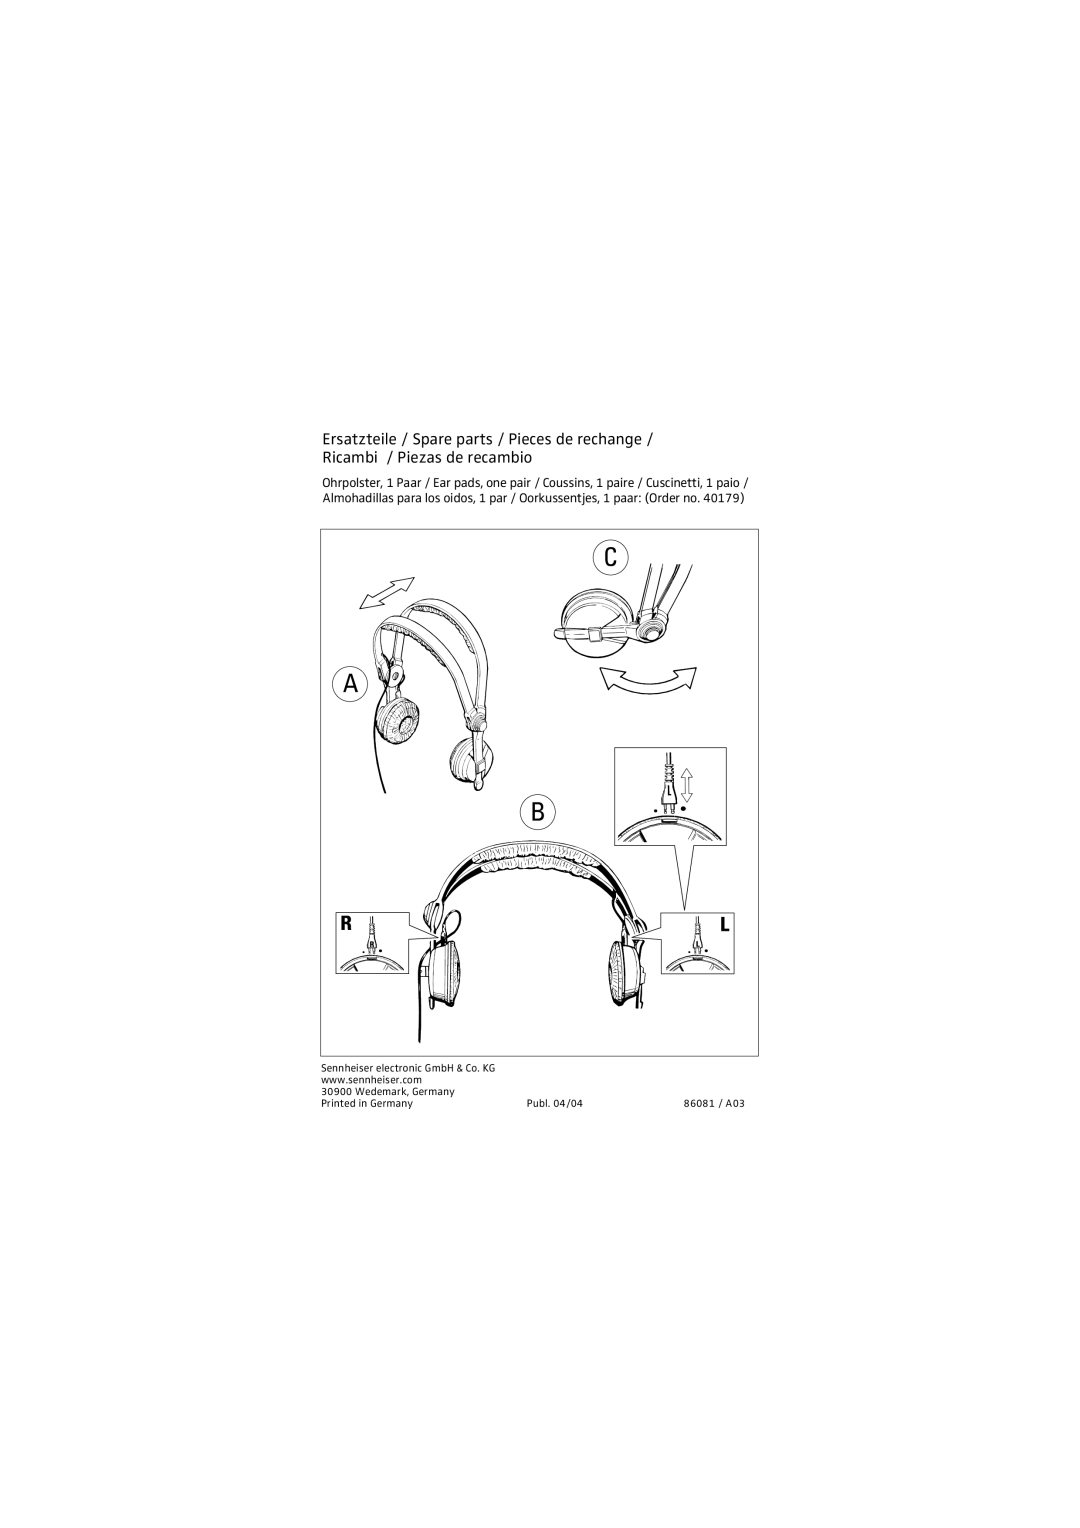 Sennheiser HD 25 - 13 manual Sennheiser electronic GmbH & Co. KG, Wedemark, Germany, Publ. 04/04, 86081 / A03 